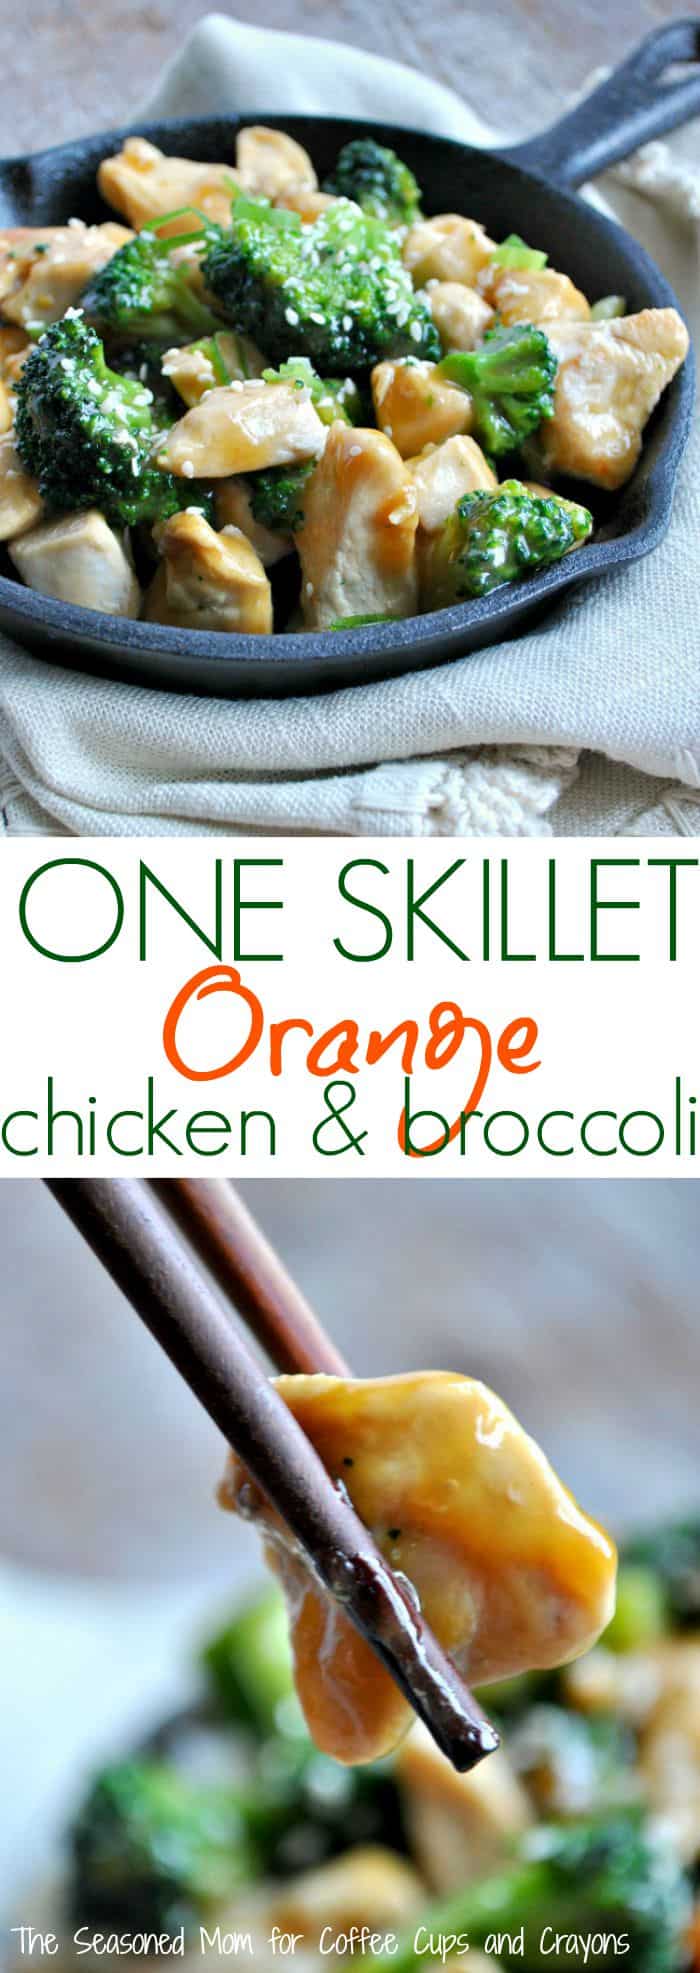 One Skillet Orange Chicken and Broccoli